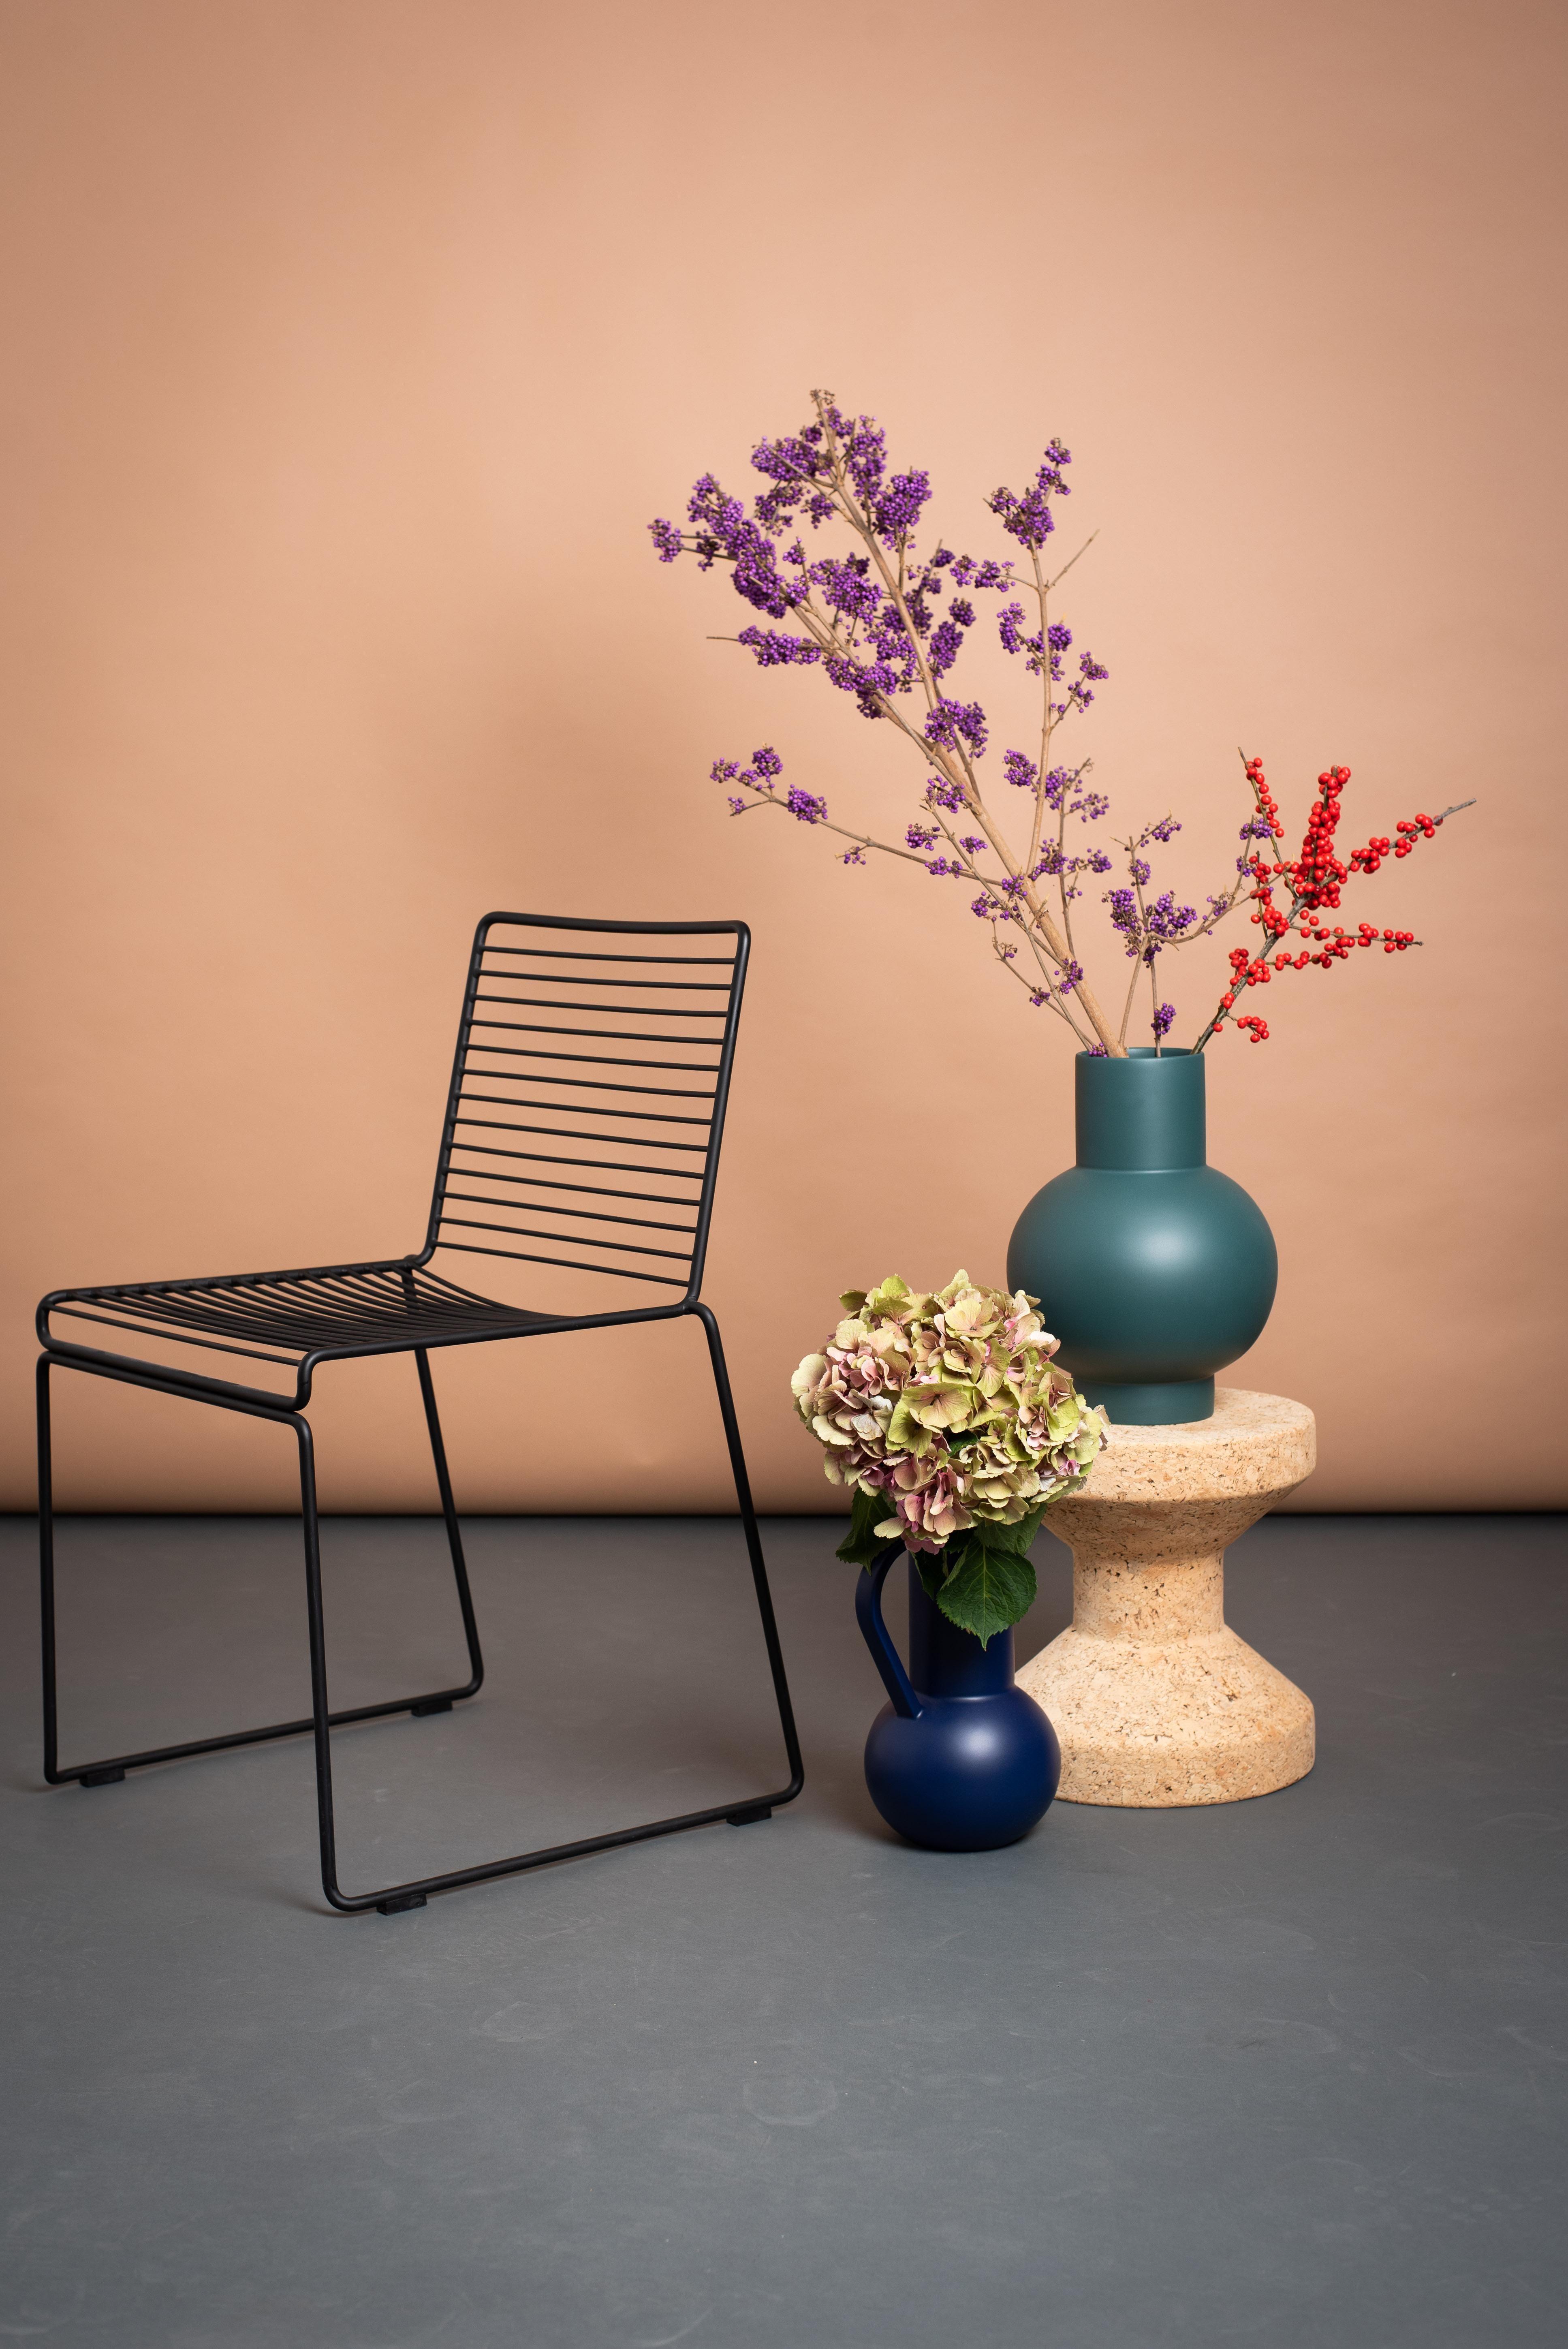 Grüße aus dem Fotostudio! #stillleben #interior #studio #vasen #stuhl #stilllife #styling #mystyle